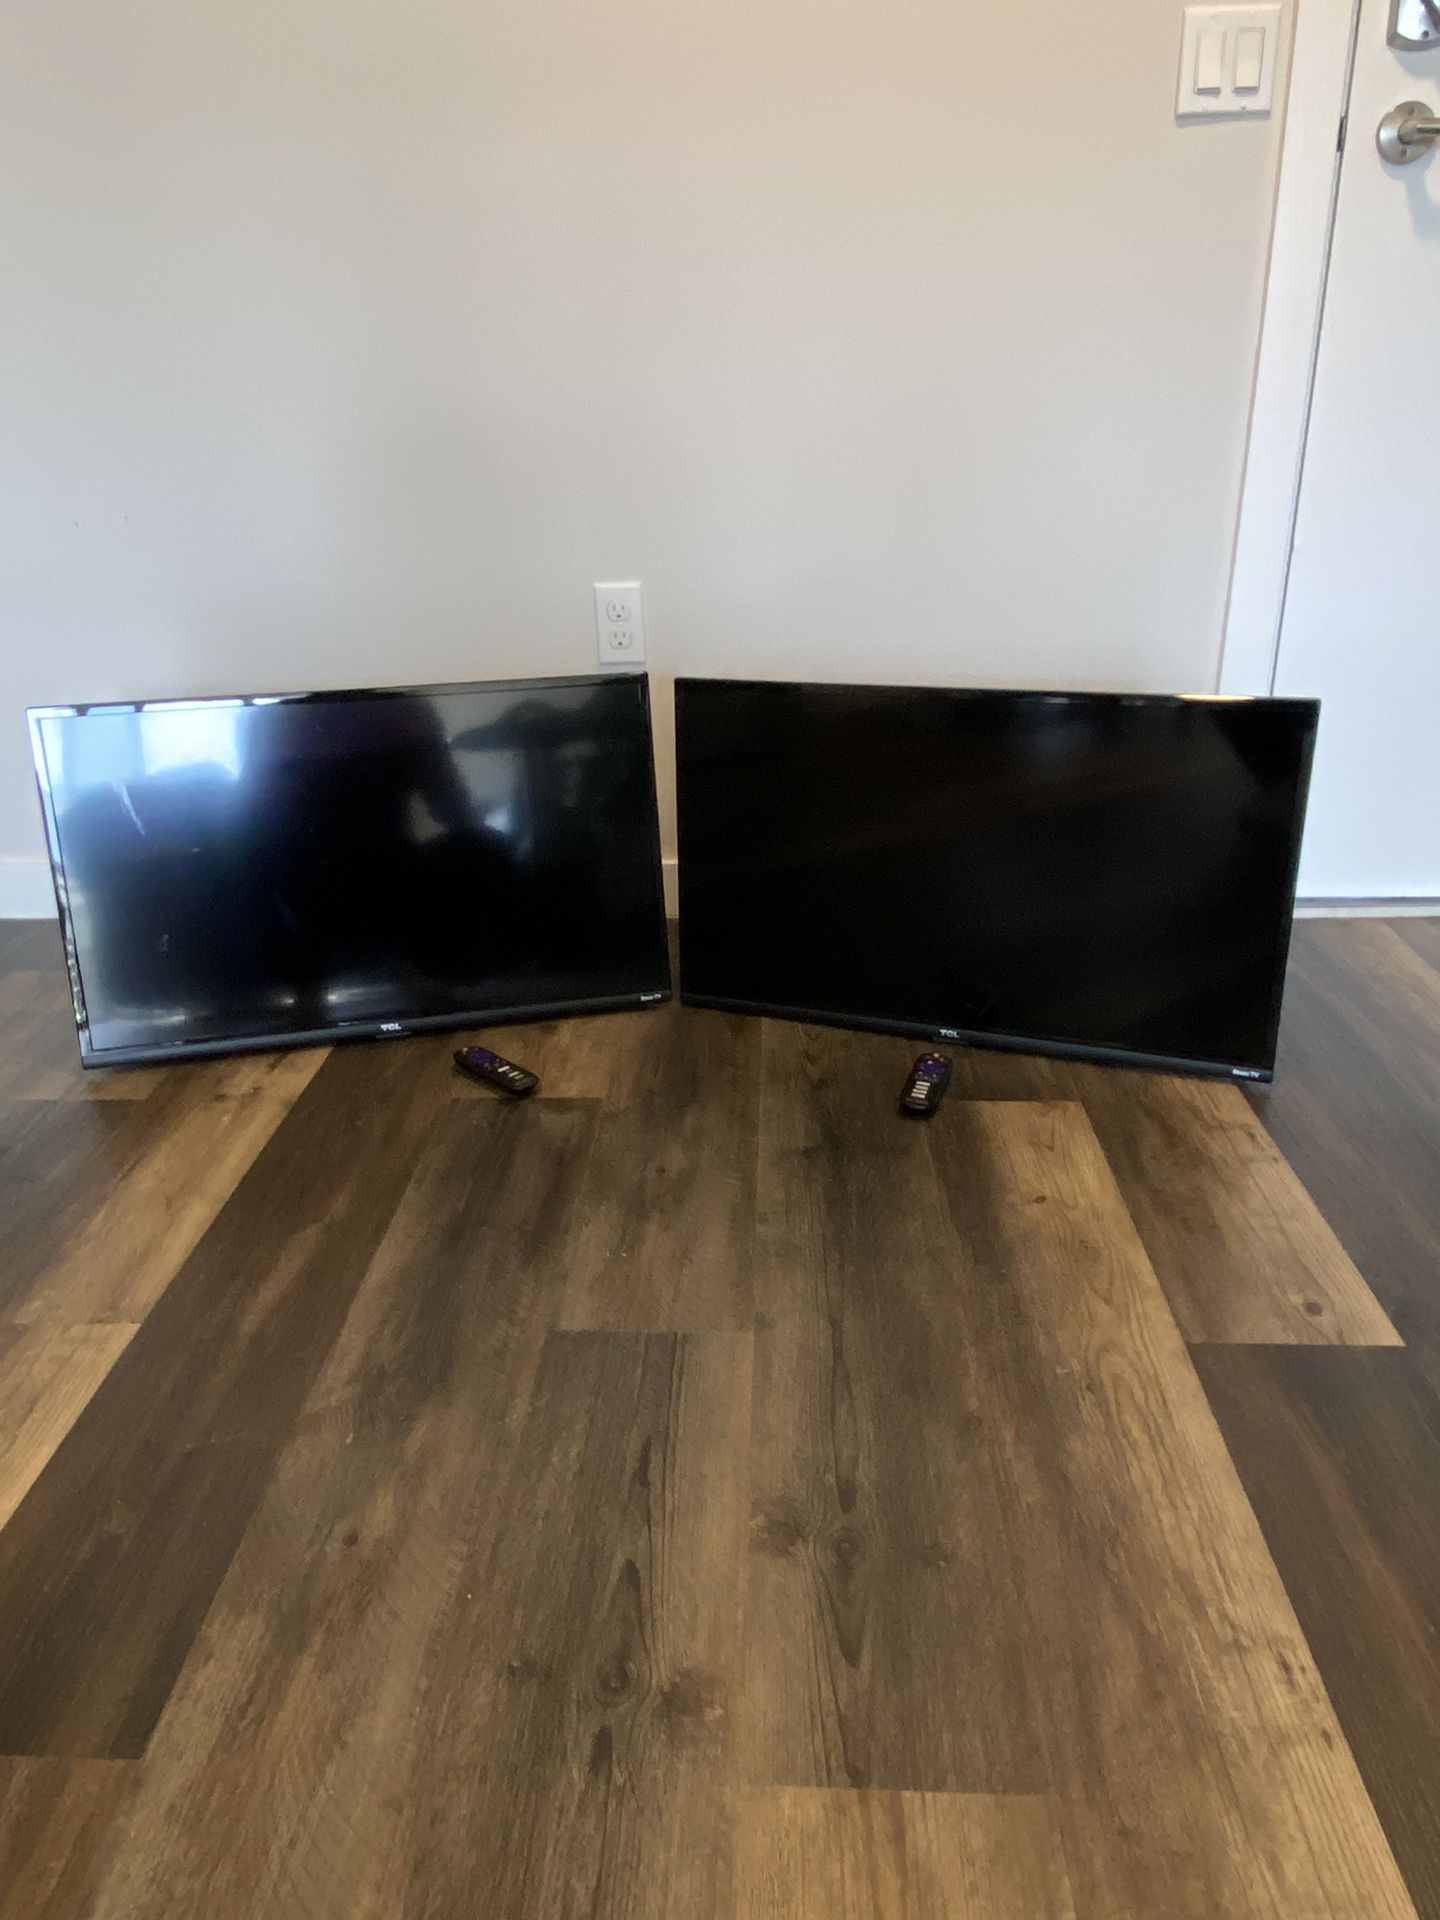 2 - TCL 32-inch 1080p Roku Smart LED TV’s - 32S327, 2019 Model